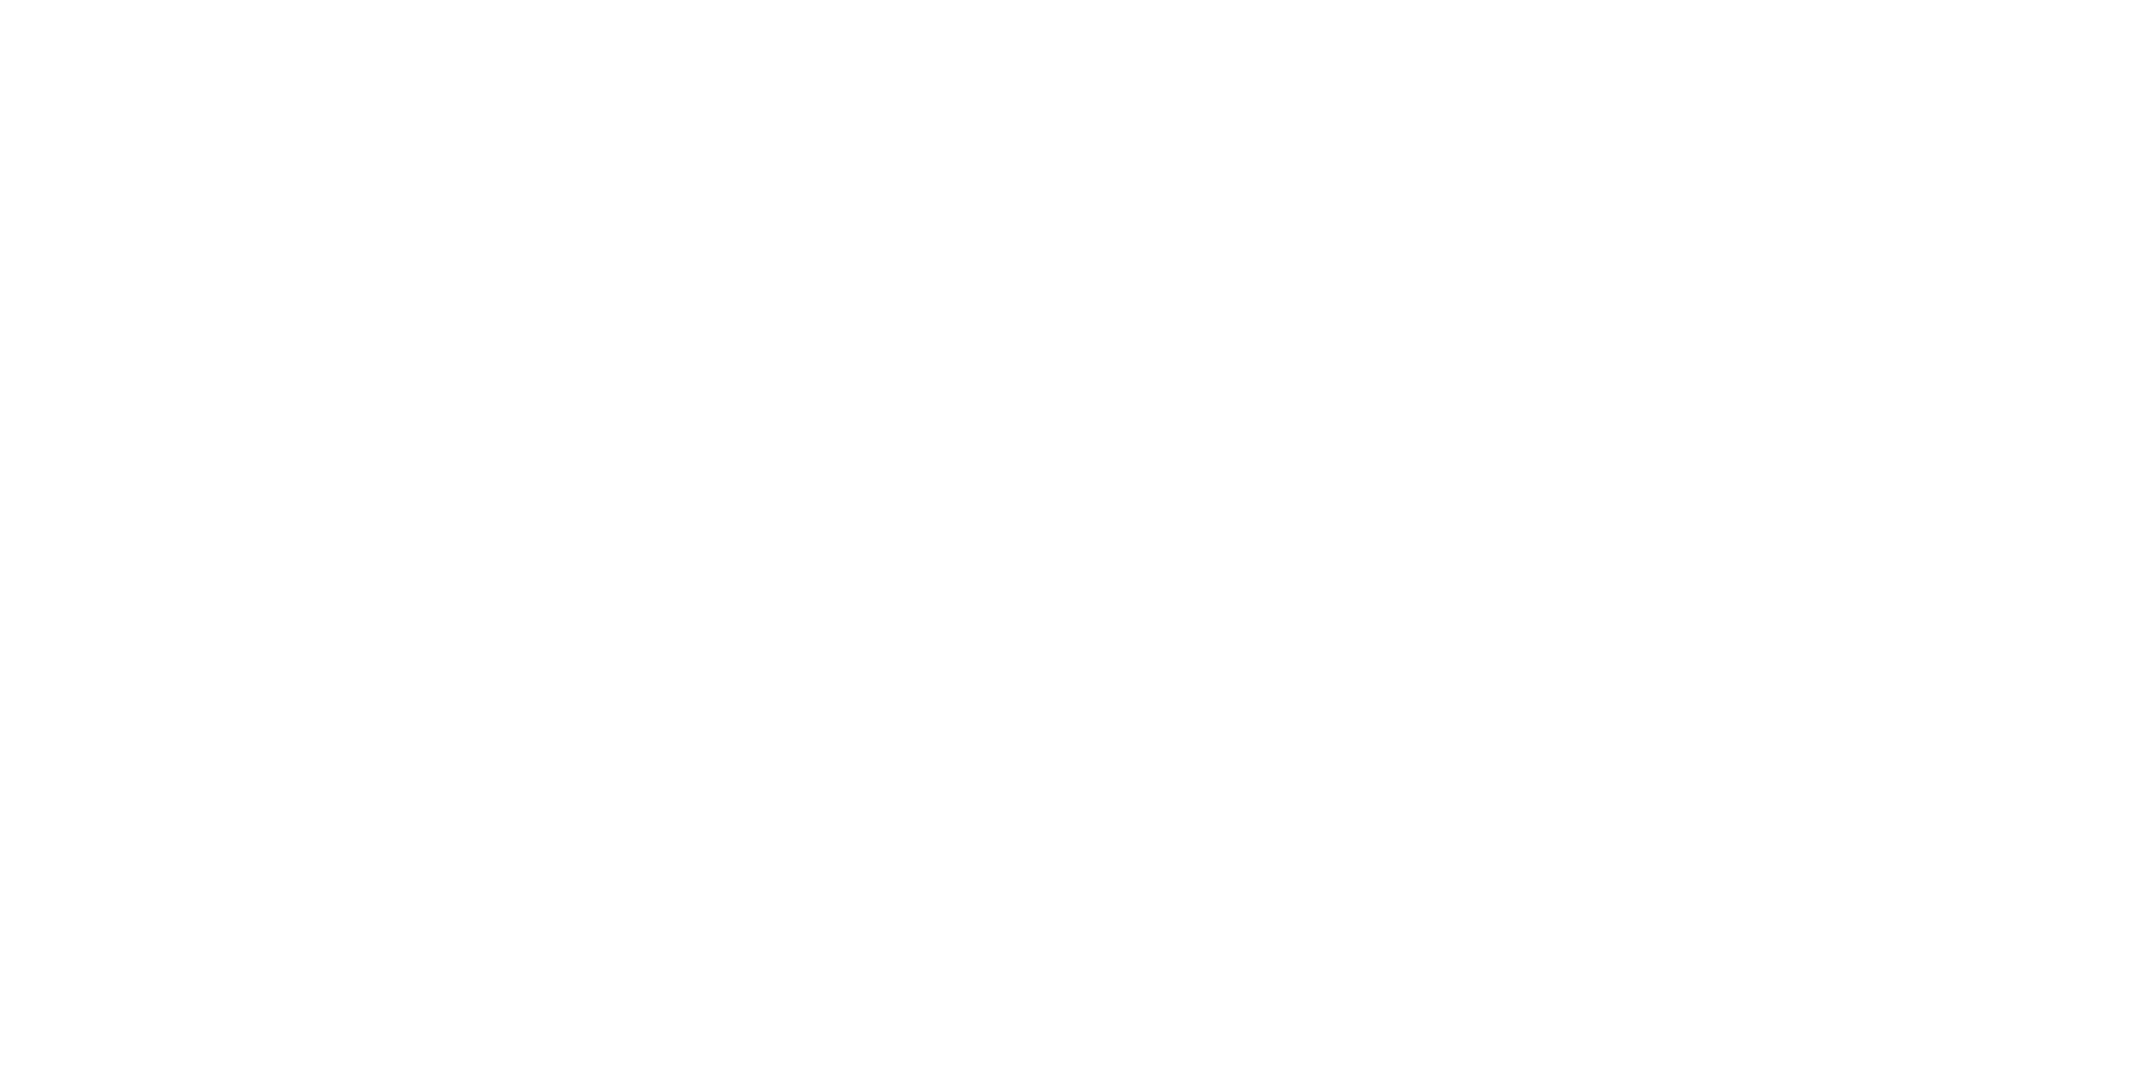 TAMILNADU MALLAKHAMB ASSOCIATION LOGO WHITE